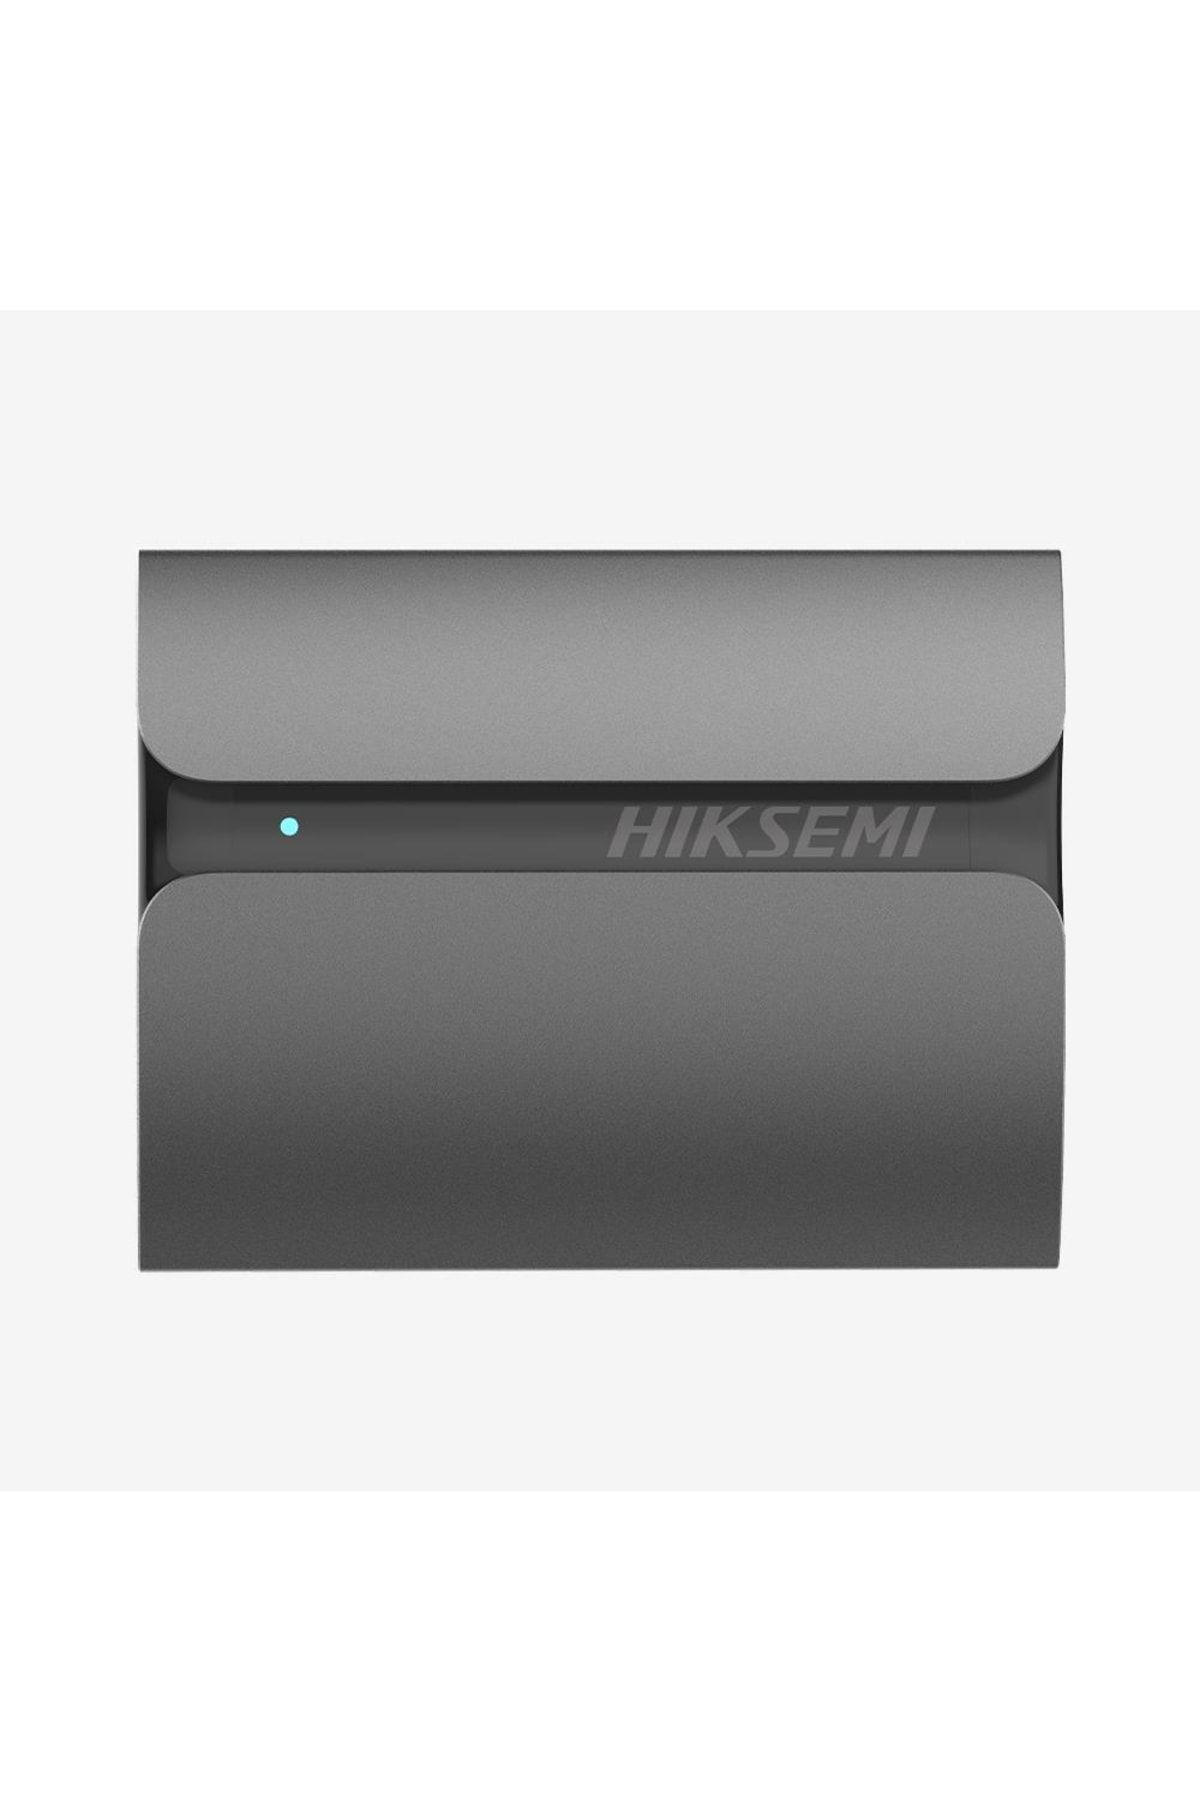 Hikvision Hiksemi T300s 320gb 560 Mb/s Usb 3.0 Type-c Taşınabilir Ssd